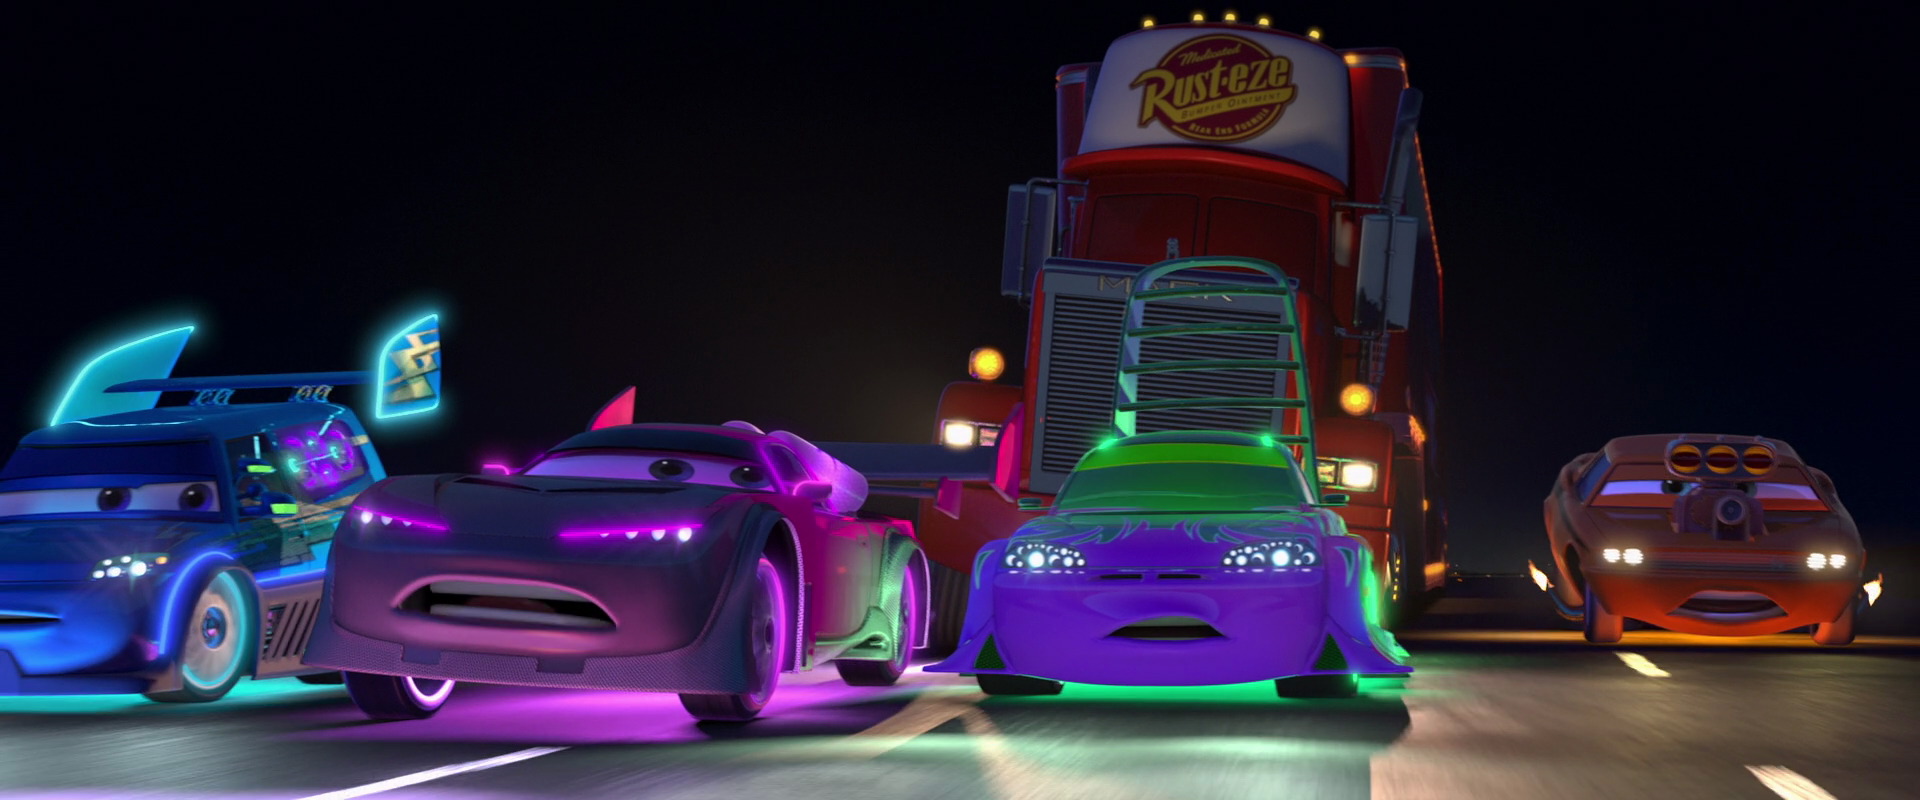 Ornament Valley Circuit, Pixar Cars Wiki